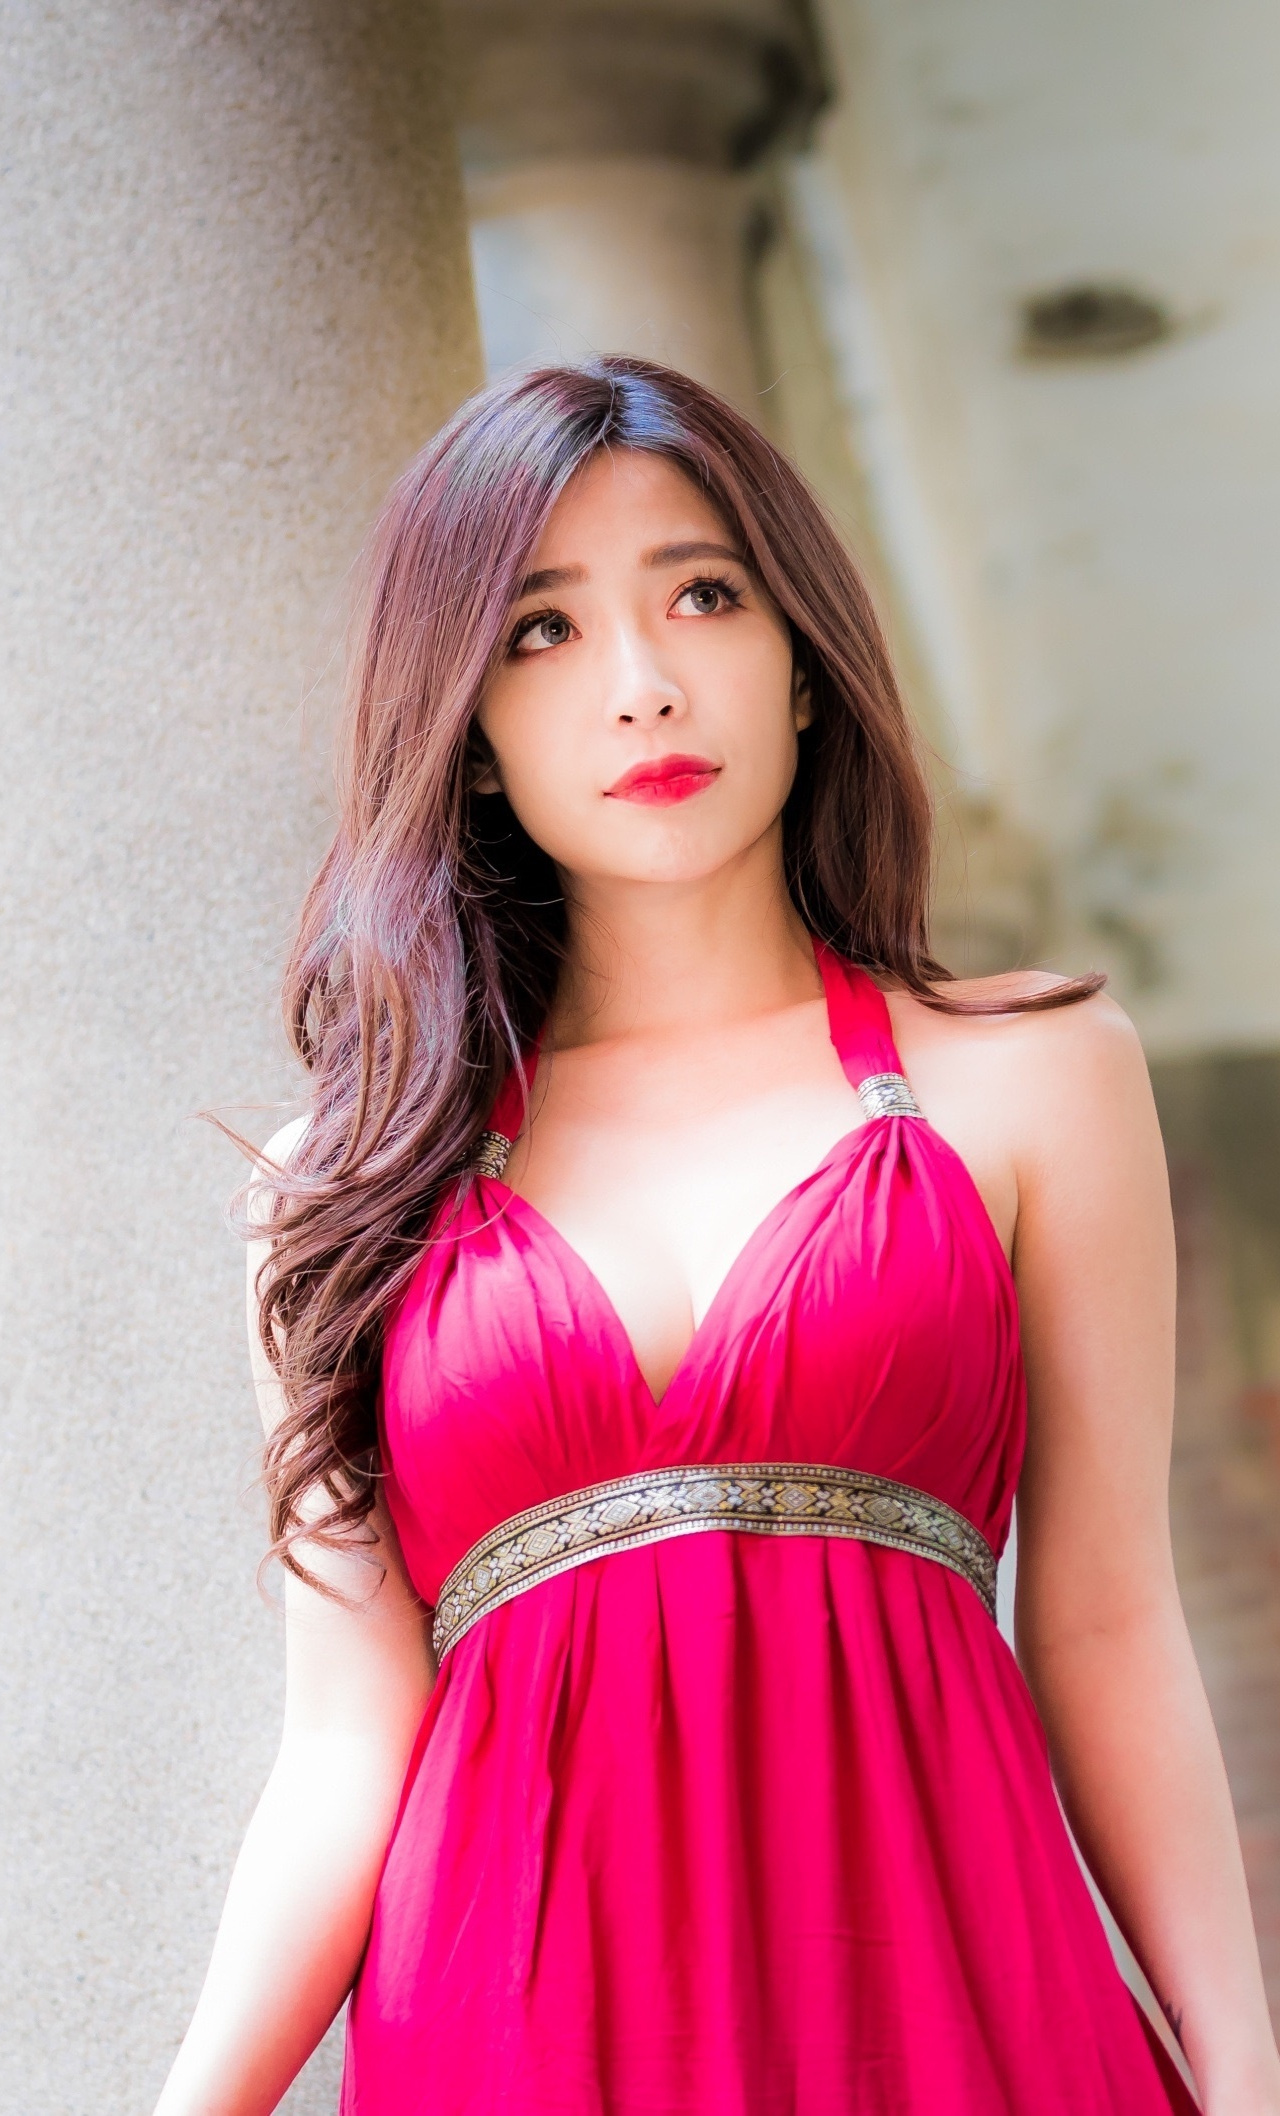 https://www.teahub.io/photos/full/207-2076231_beautiful-girl-model-asian-woman-wallpaper-girl-wallpaper.jpg